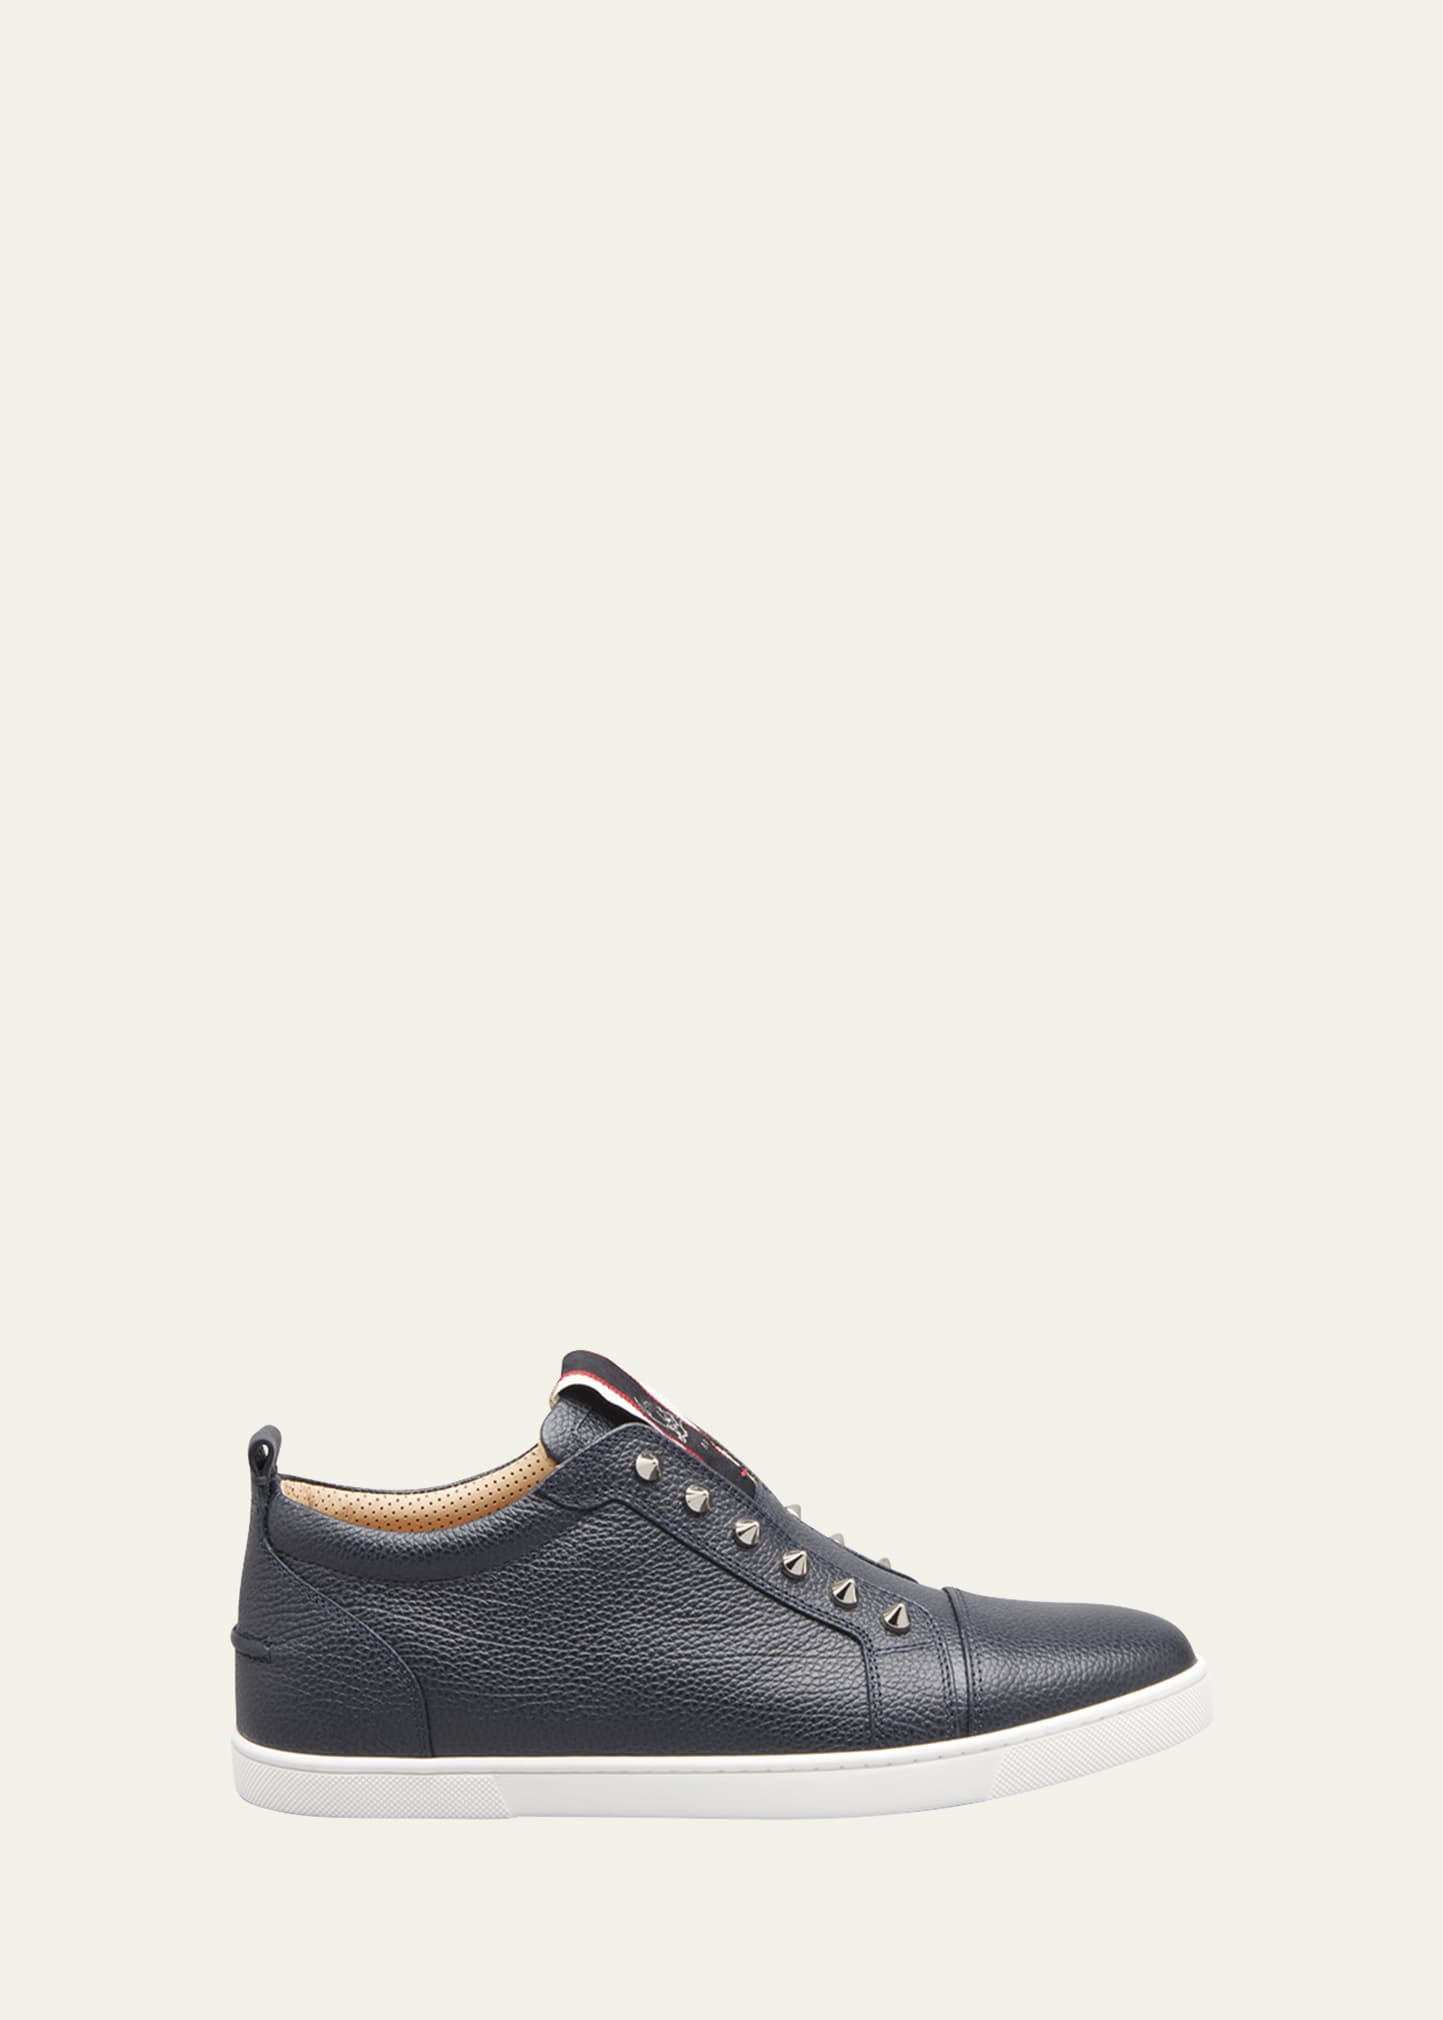 Christian Louboutin Shoes for Men